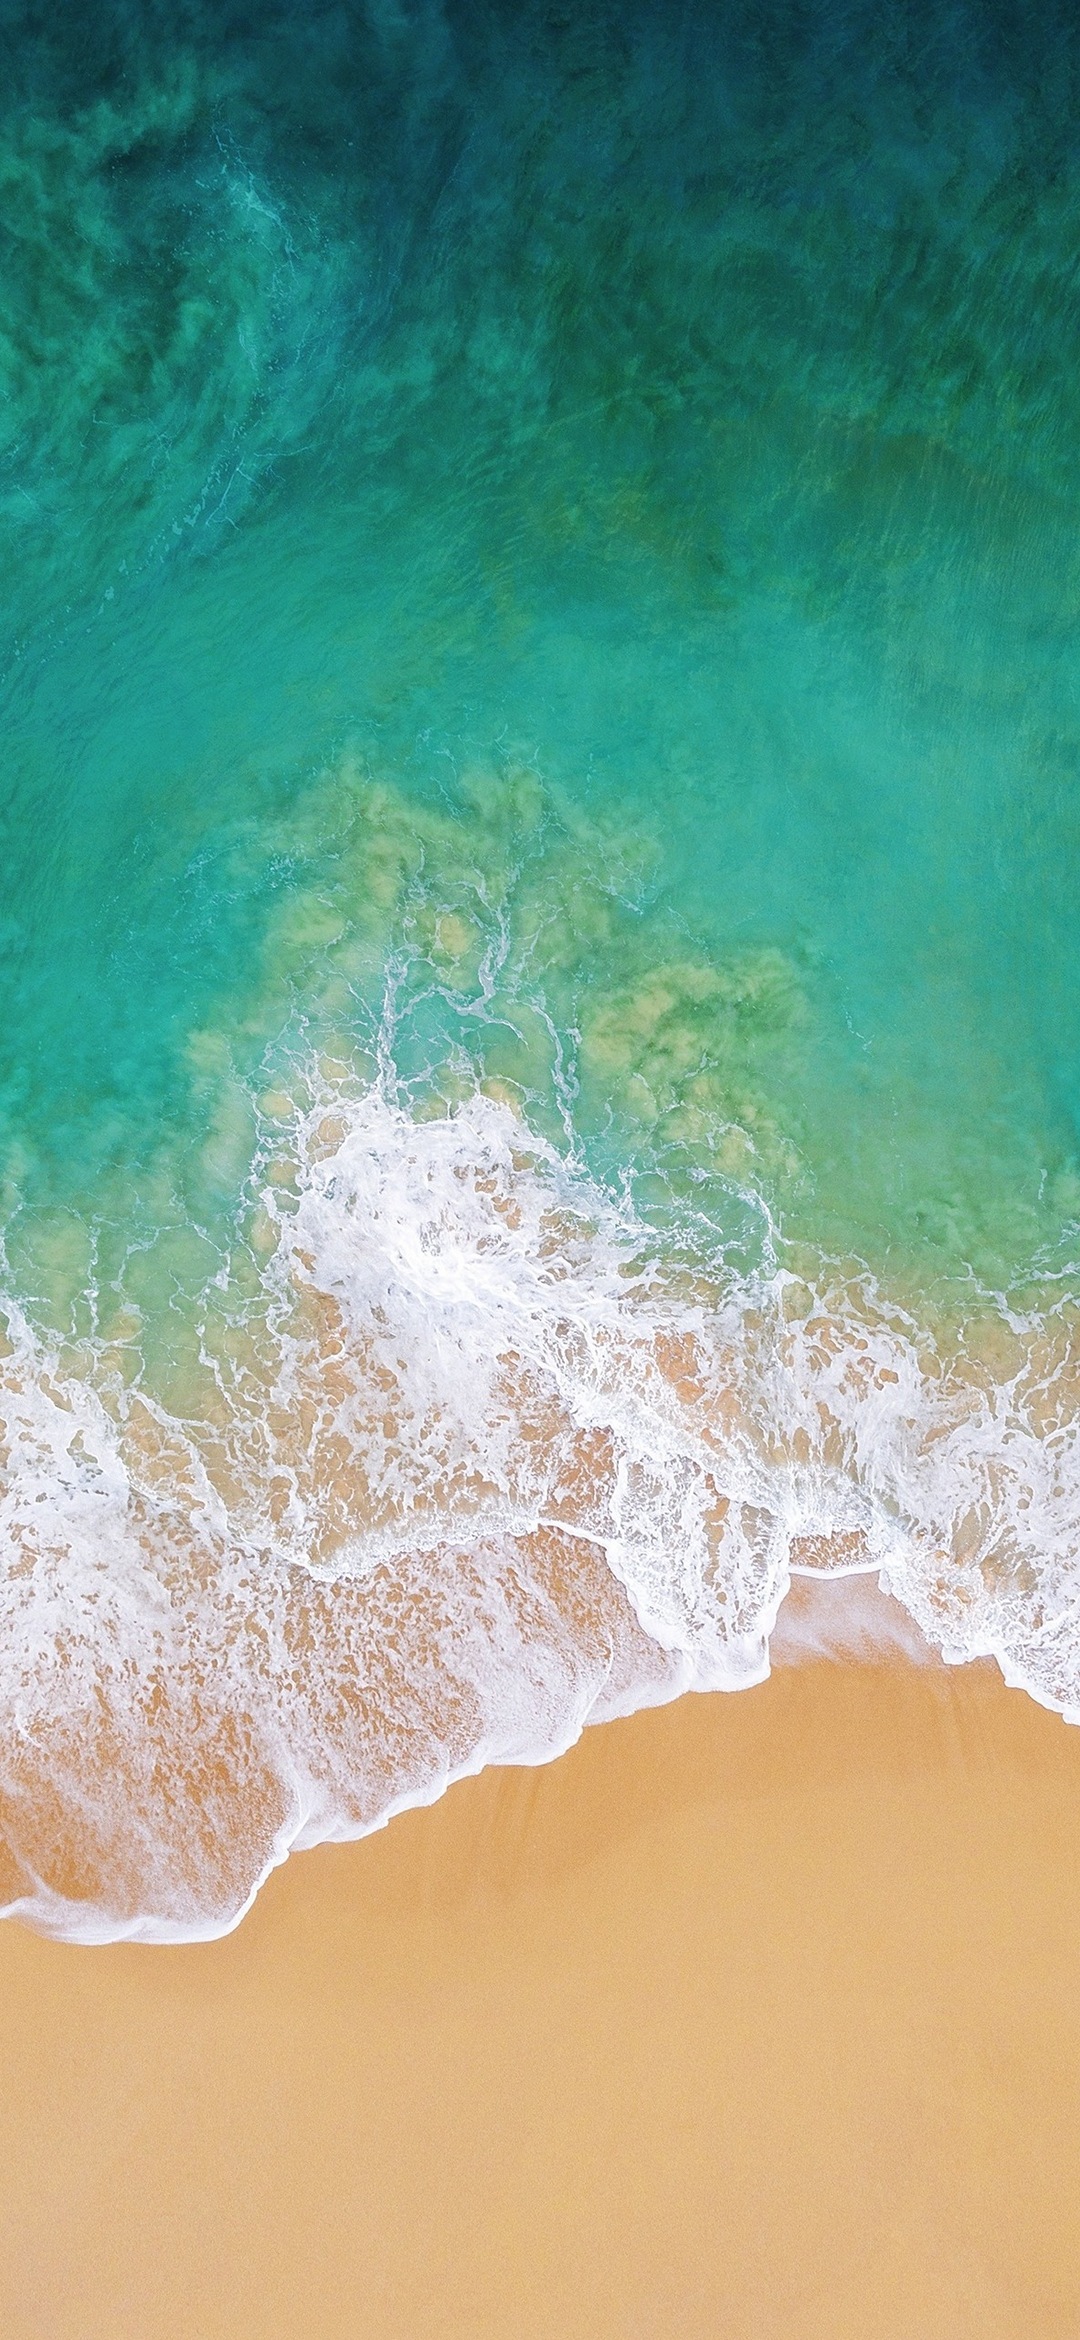 Bird S Eye View Blue Sea And Beautiful Sandy Beach Redmagic 5 Android スマホ壁紙 待ち受け スマラン